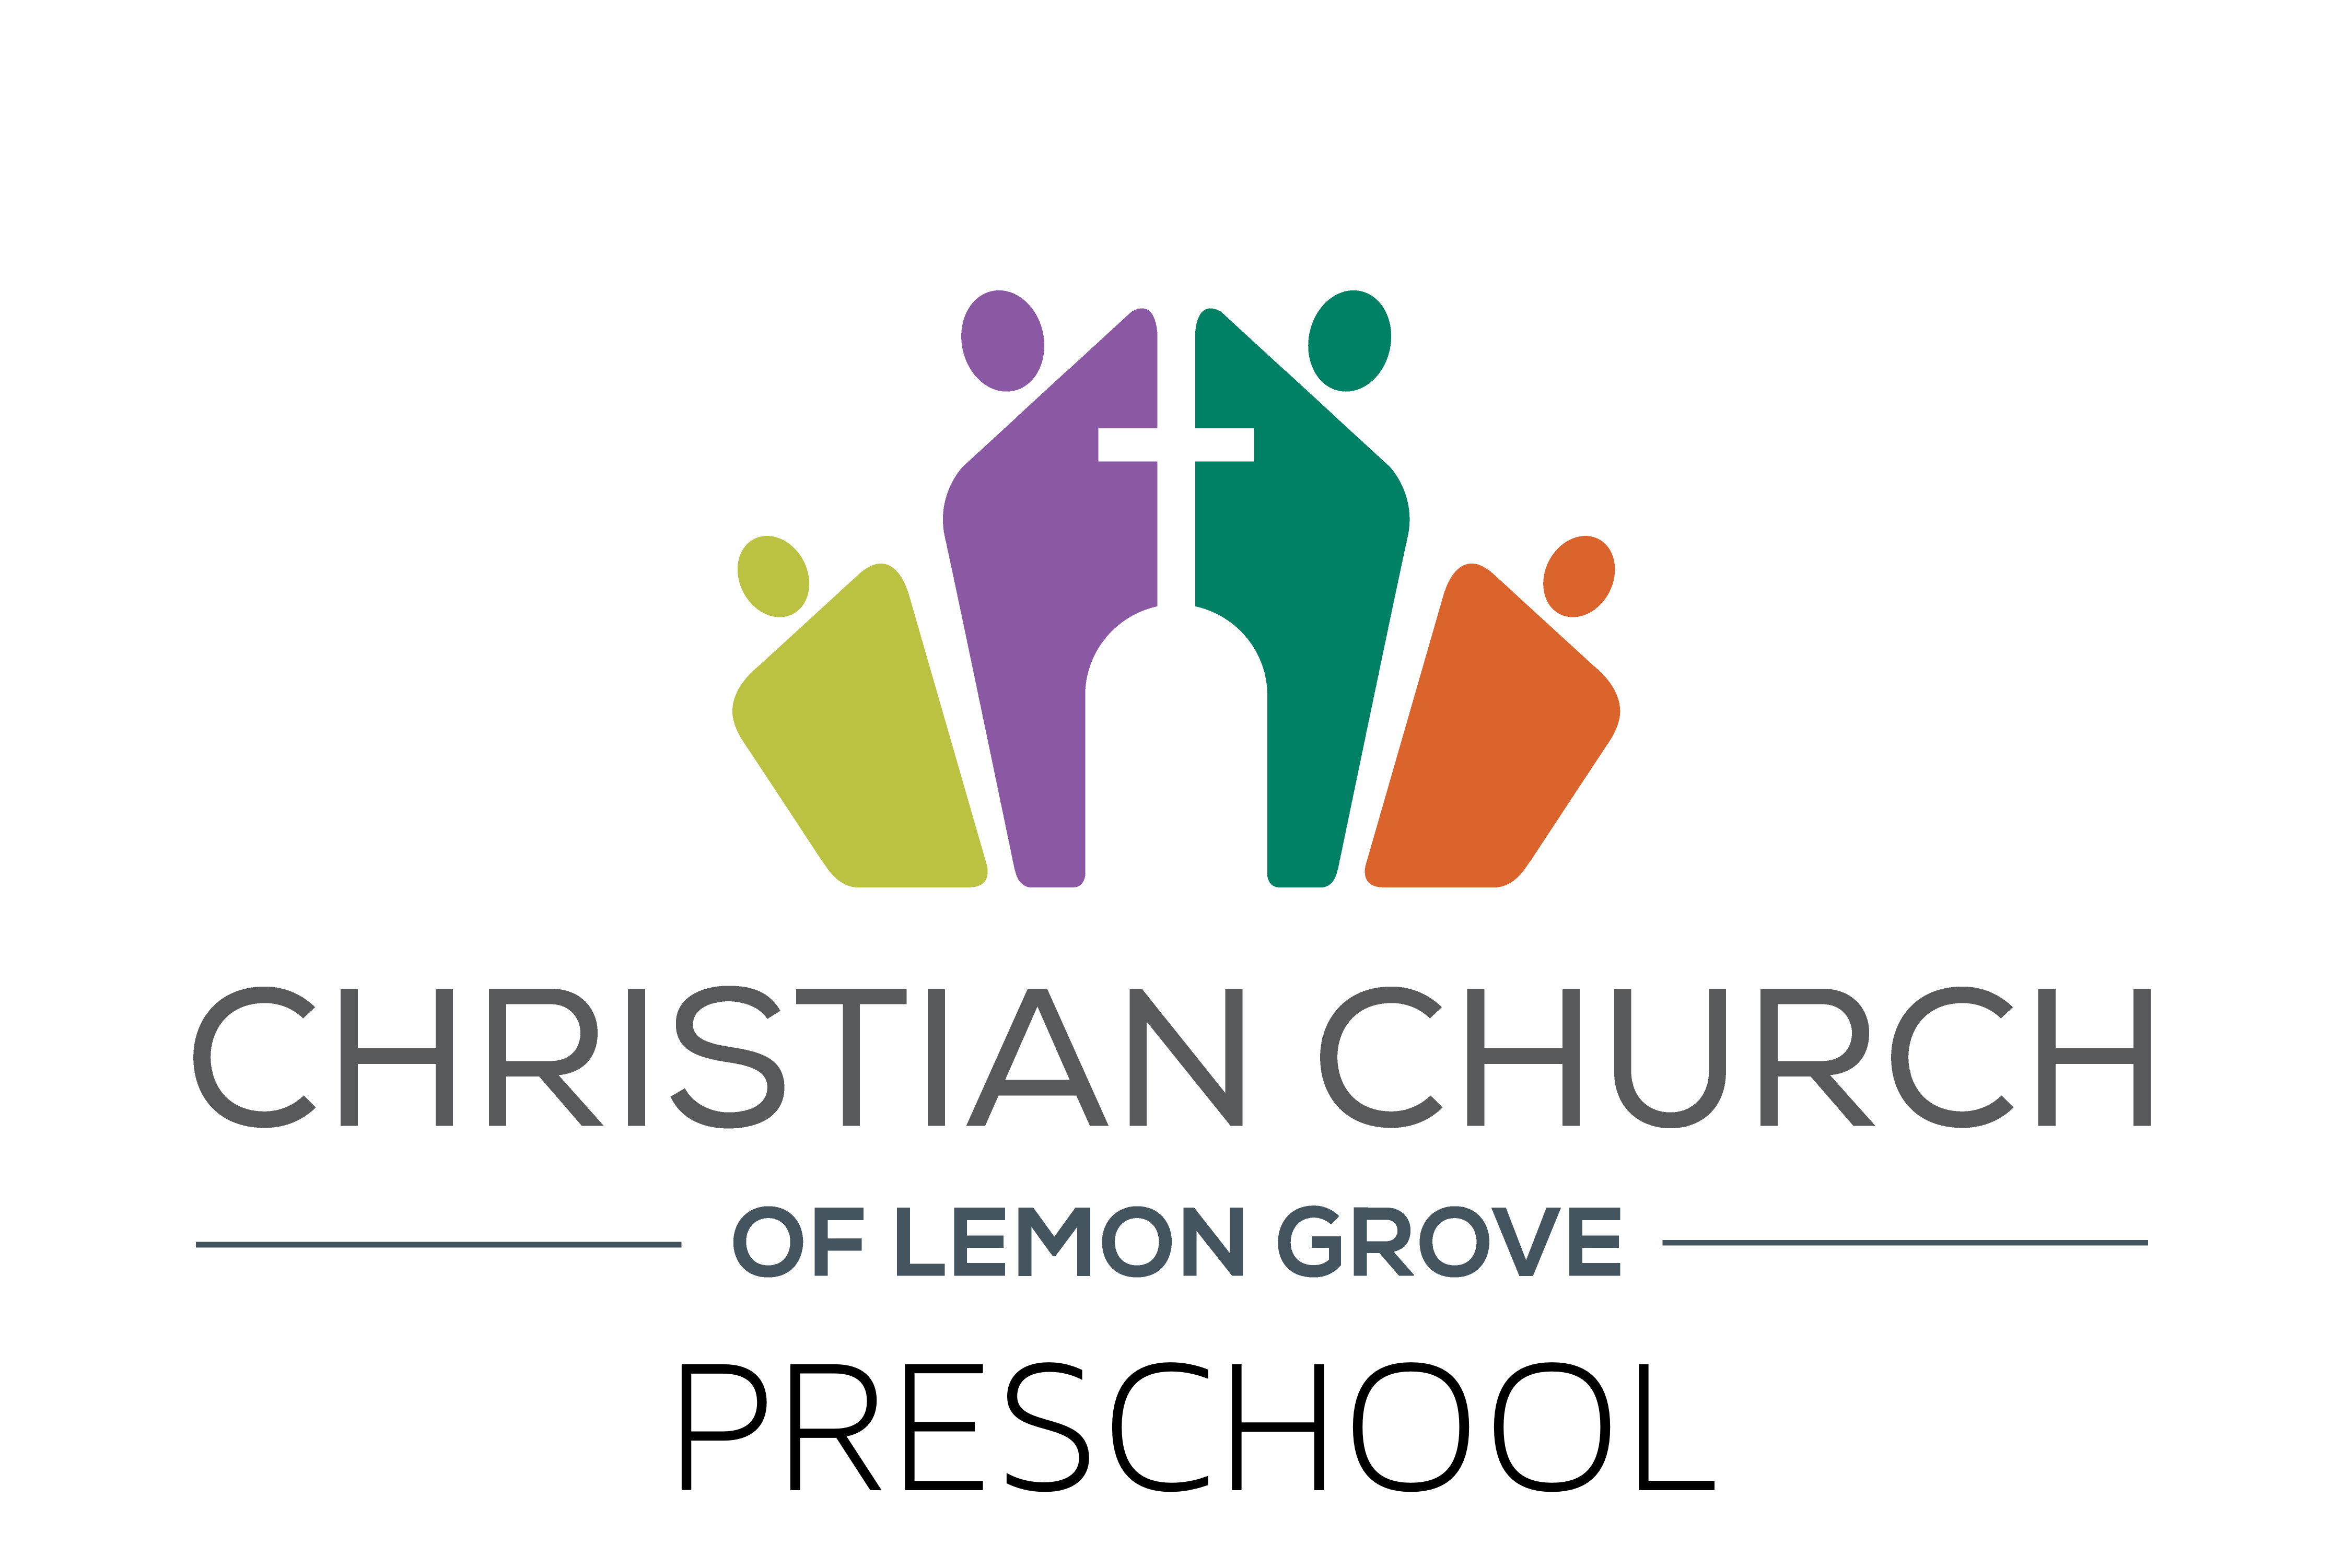 Christian Church of Lemon Grove Preschool